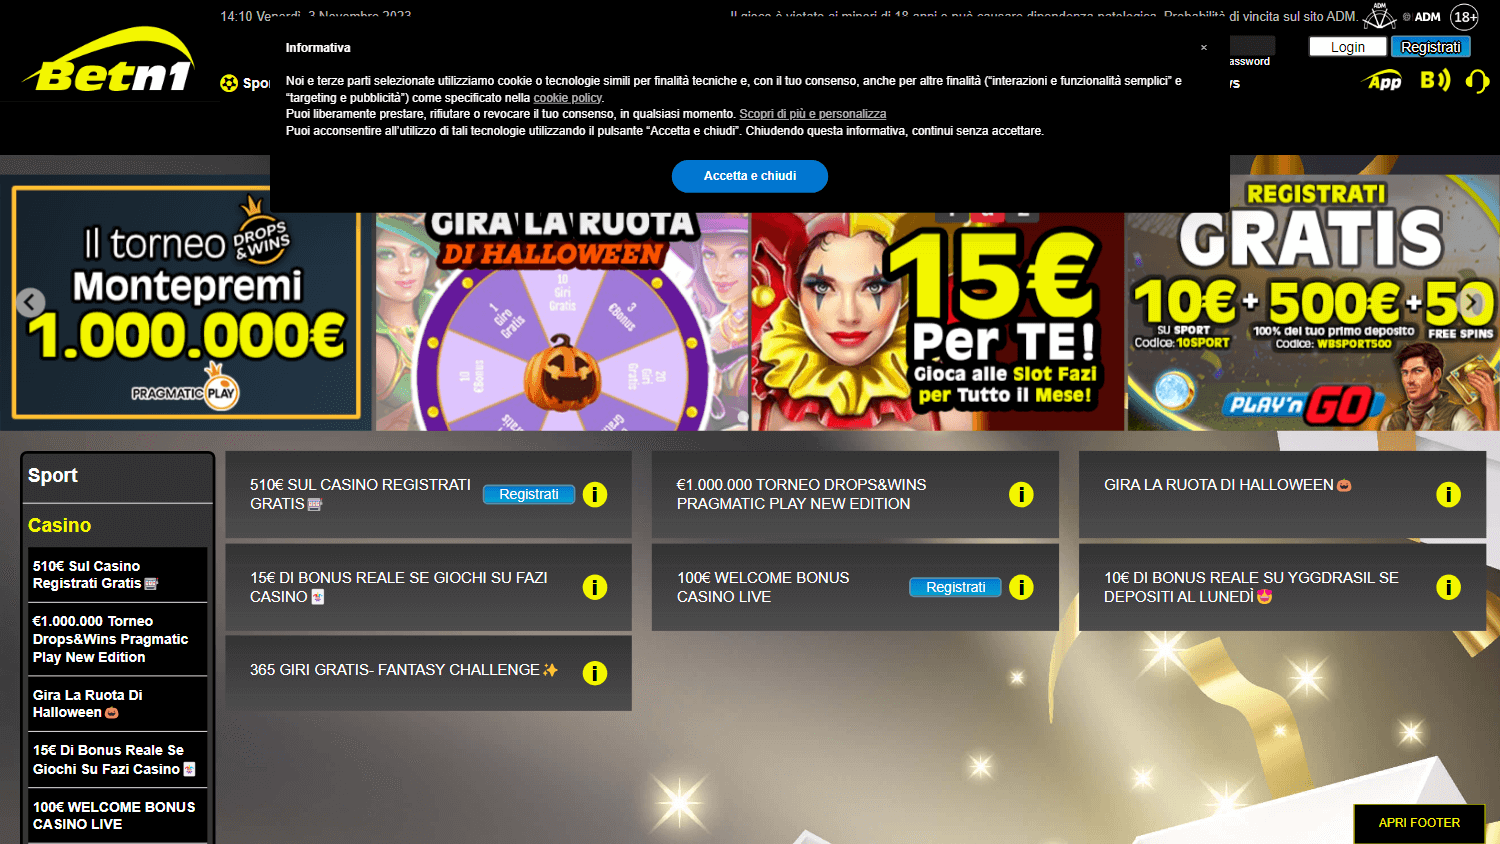 betn1_casino_it_promotions_desktop